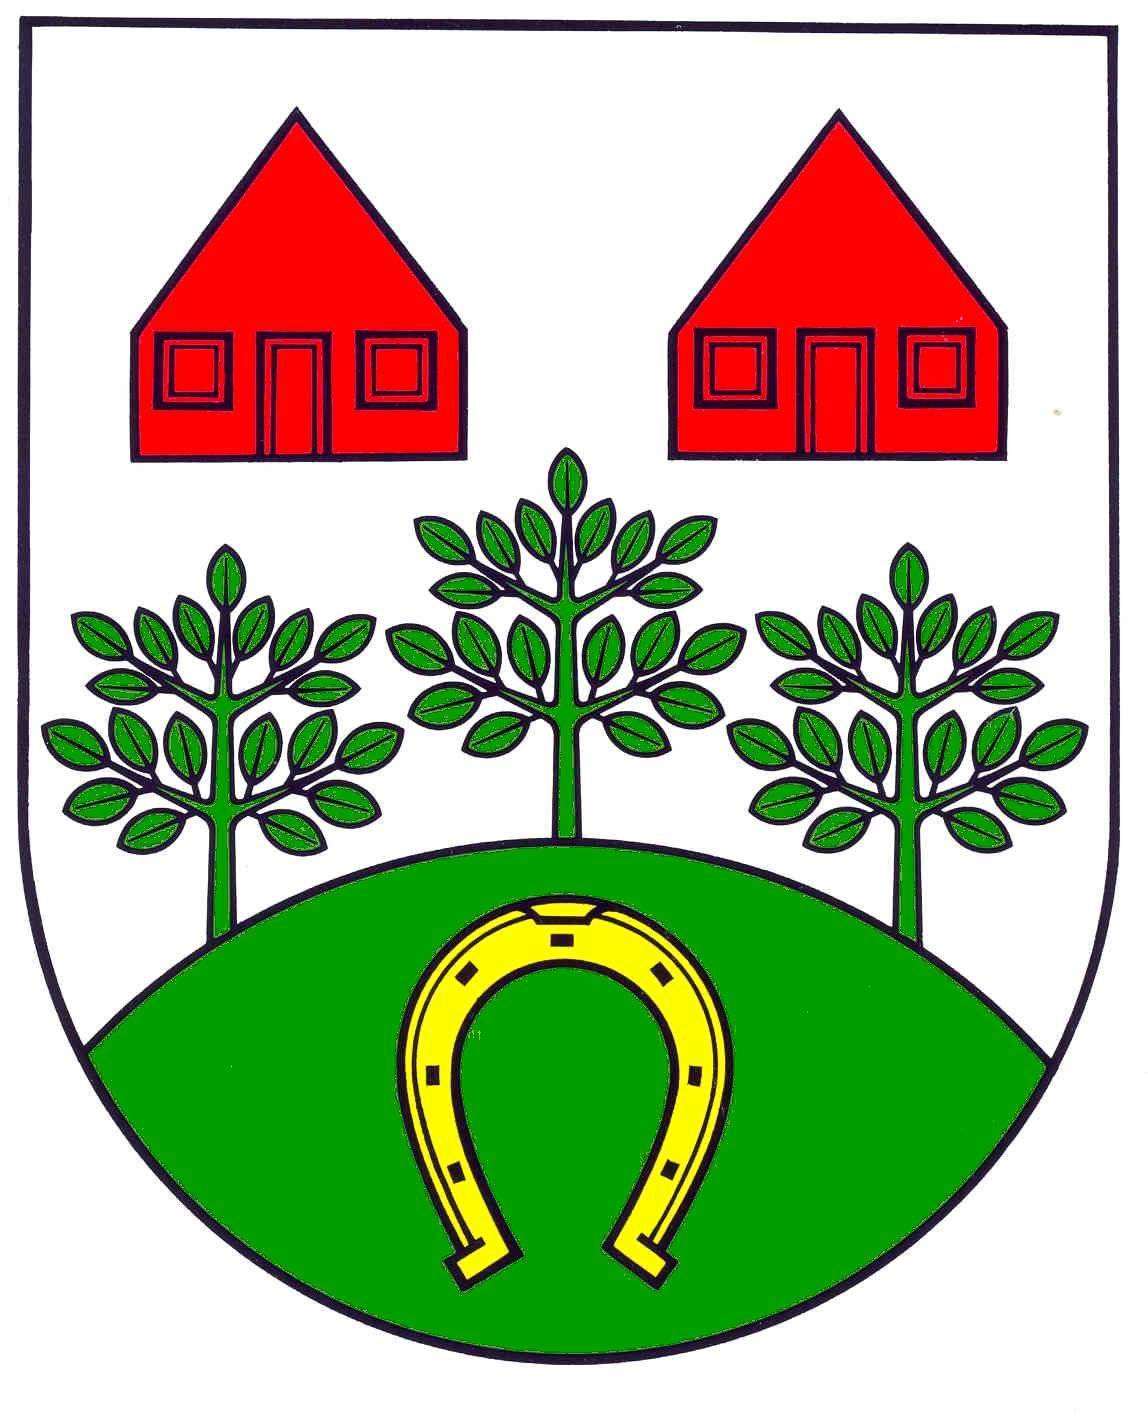 Wappen Gemeinde Ammersbek, Kreis Stormarn